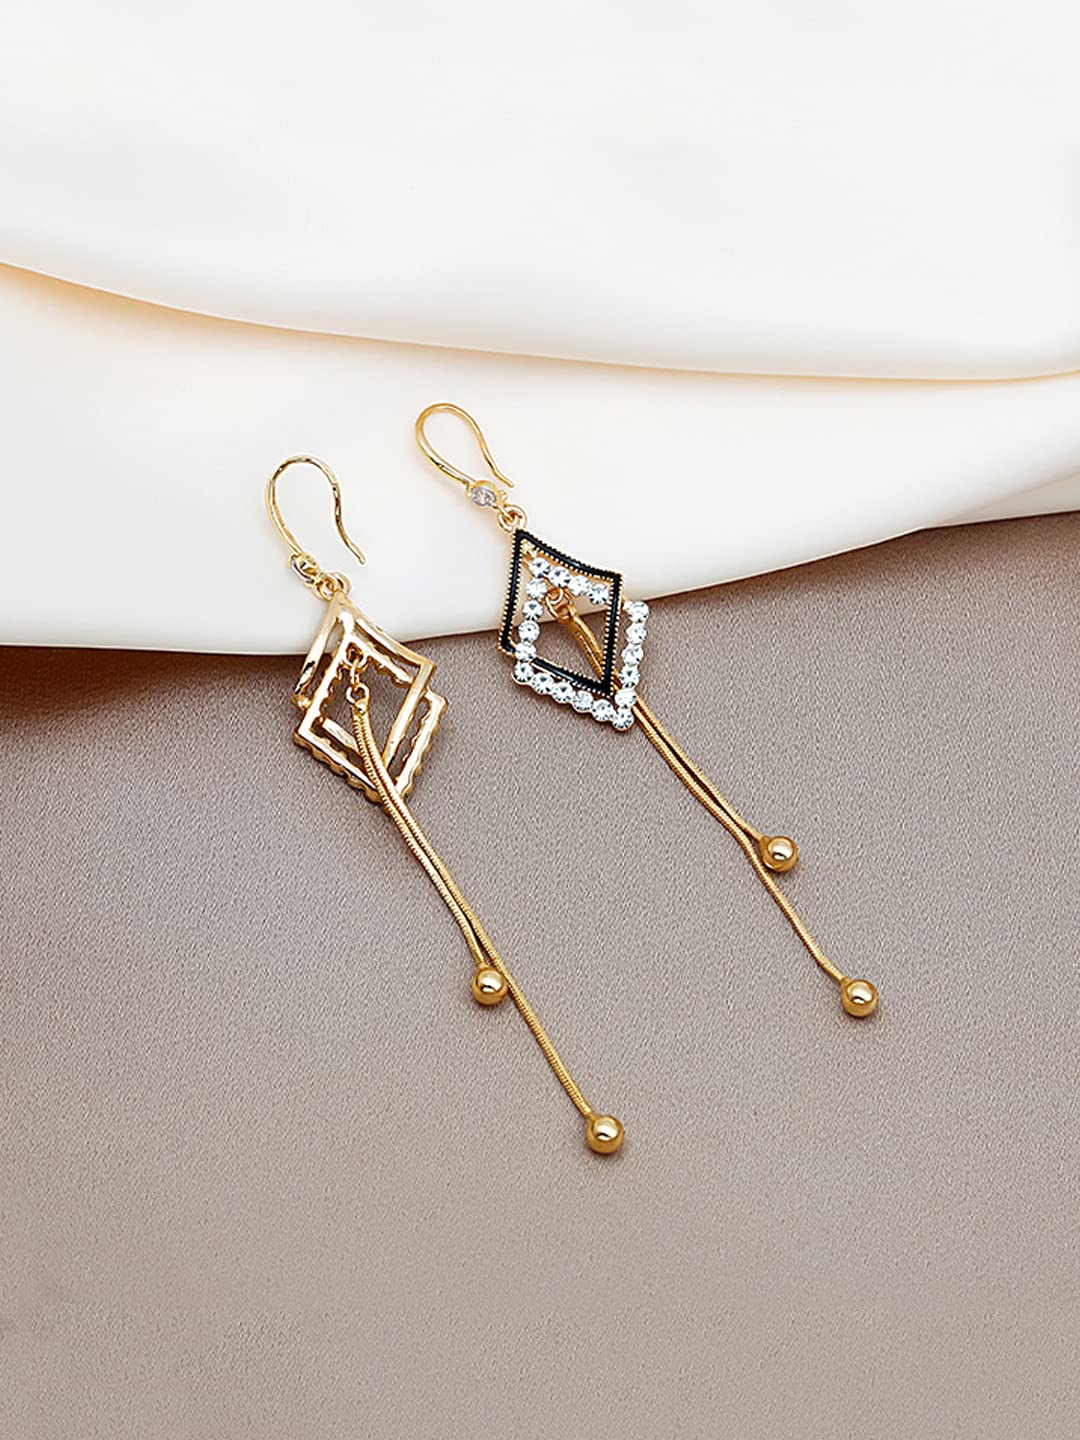 Yellow Chimes Earrings for Women and Girls Geometric Designed Dangler | Gold Tone Long Dangler Earrings | Birthday Gift for girls and women Anniversary Gift for Wife